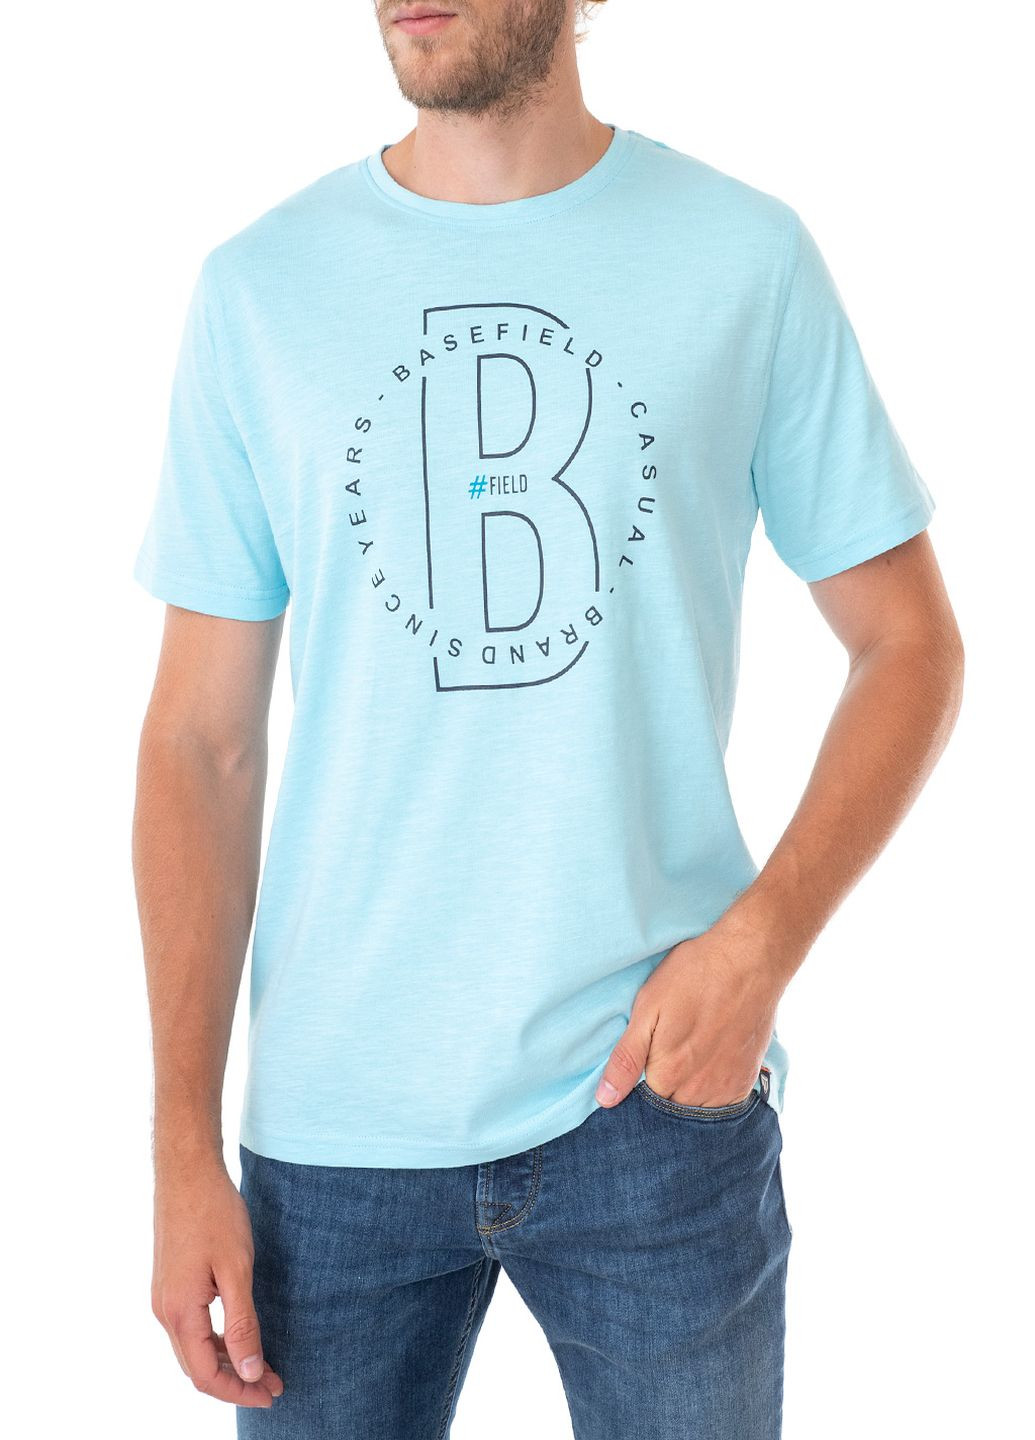 Голубая футболка Basefield